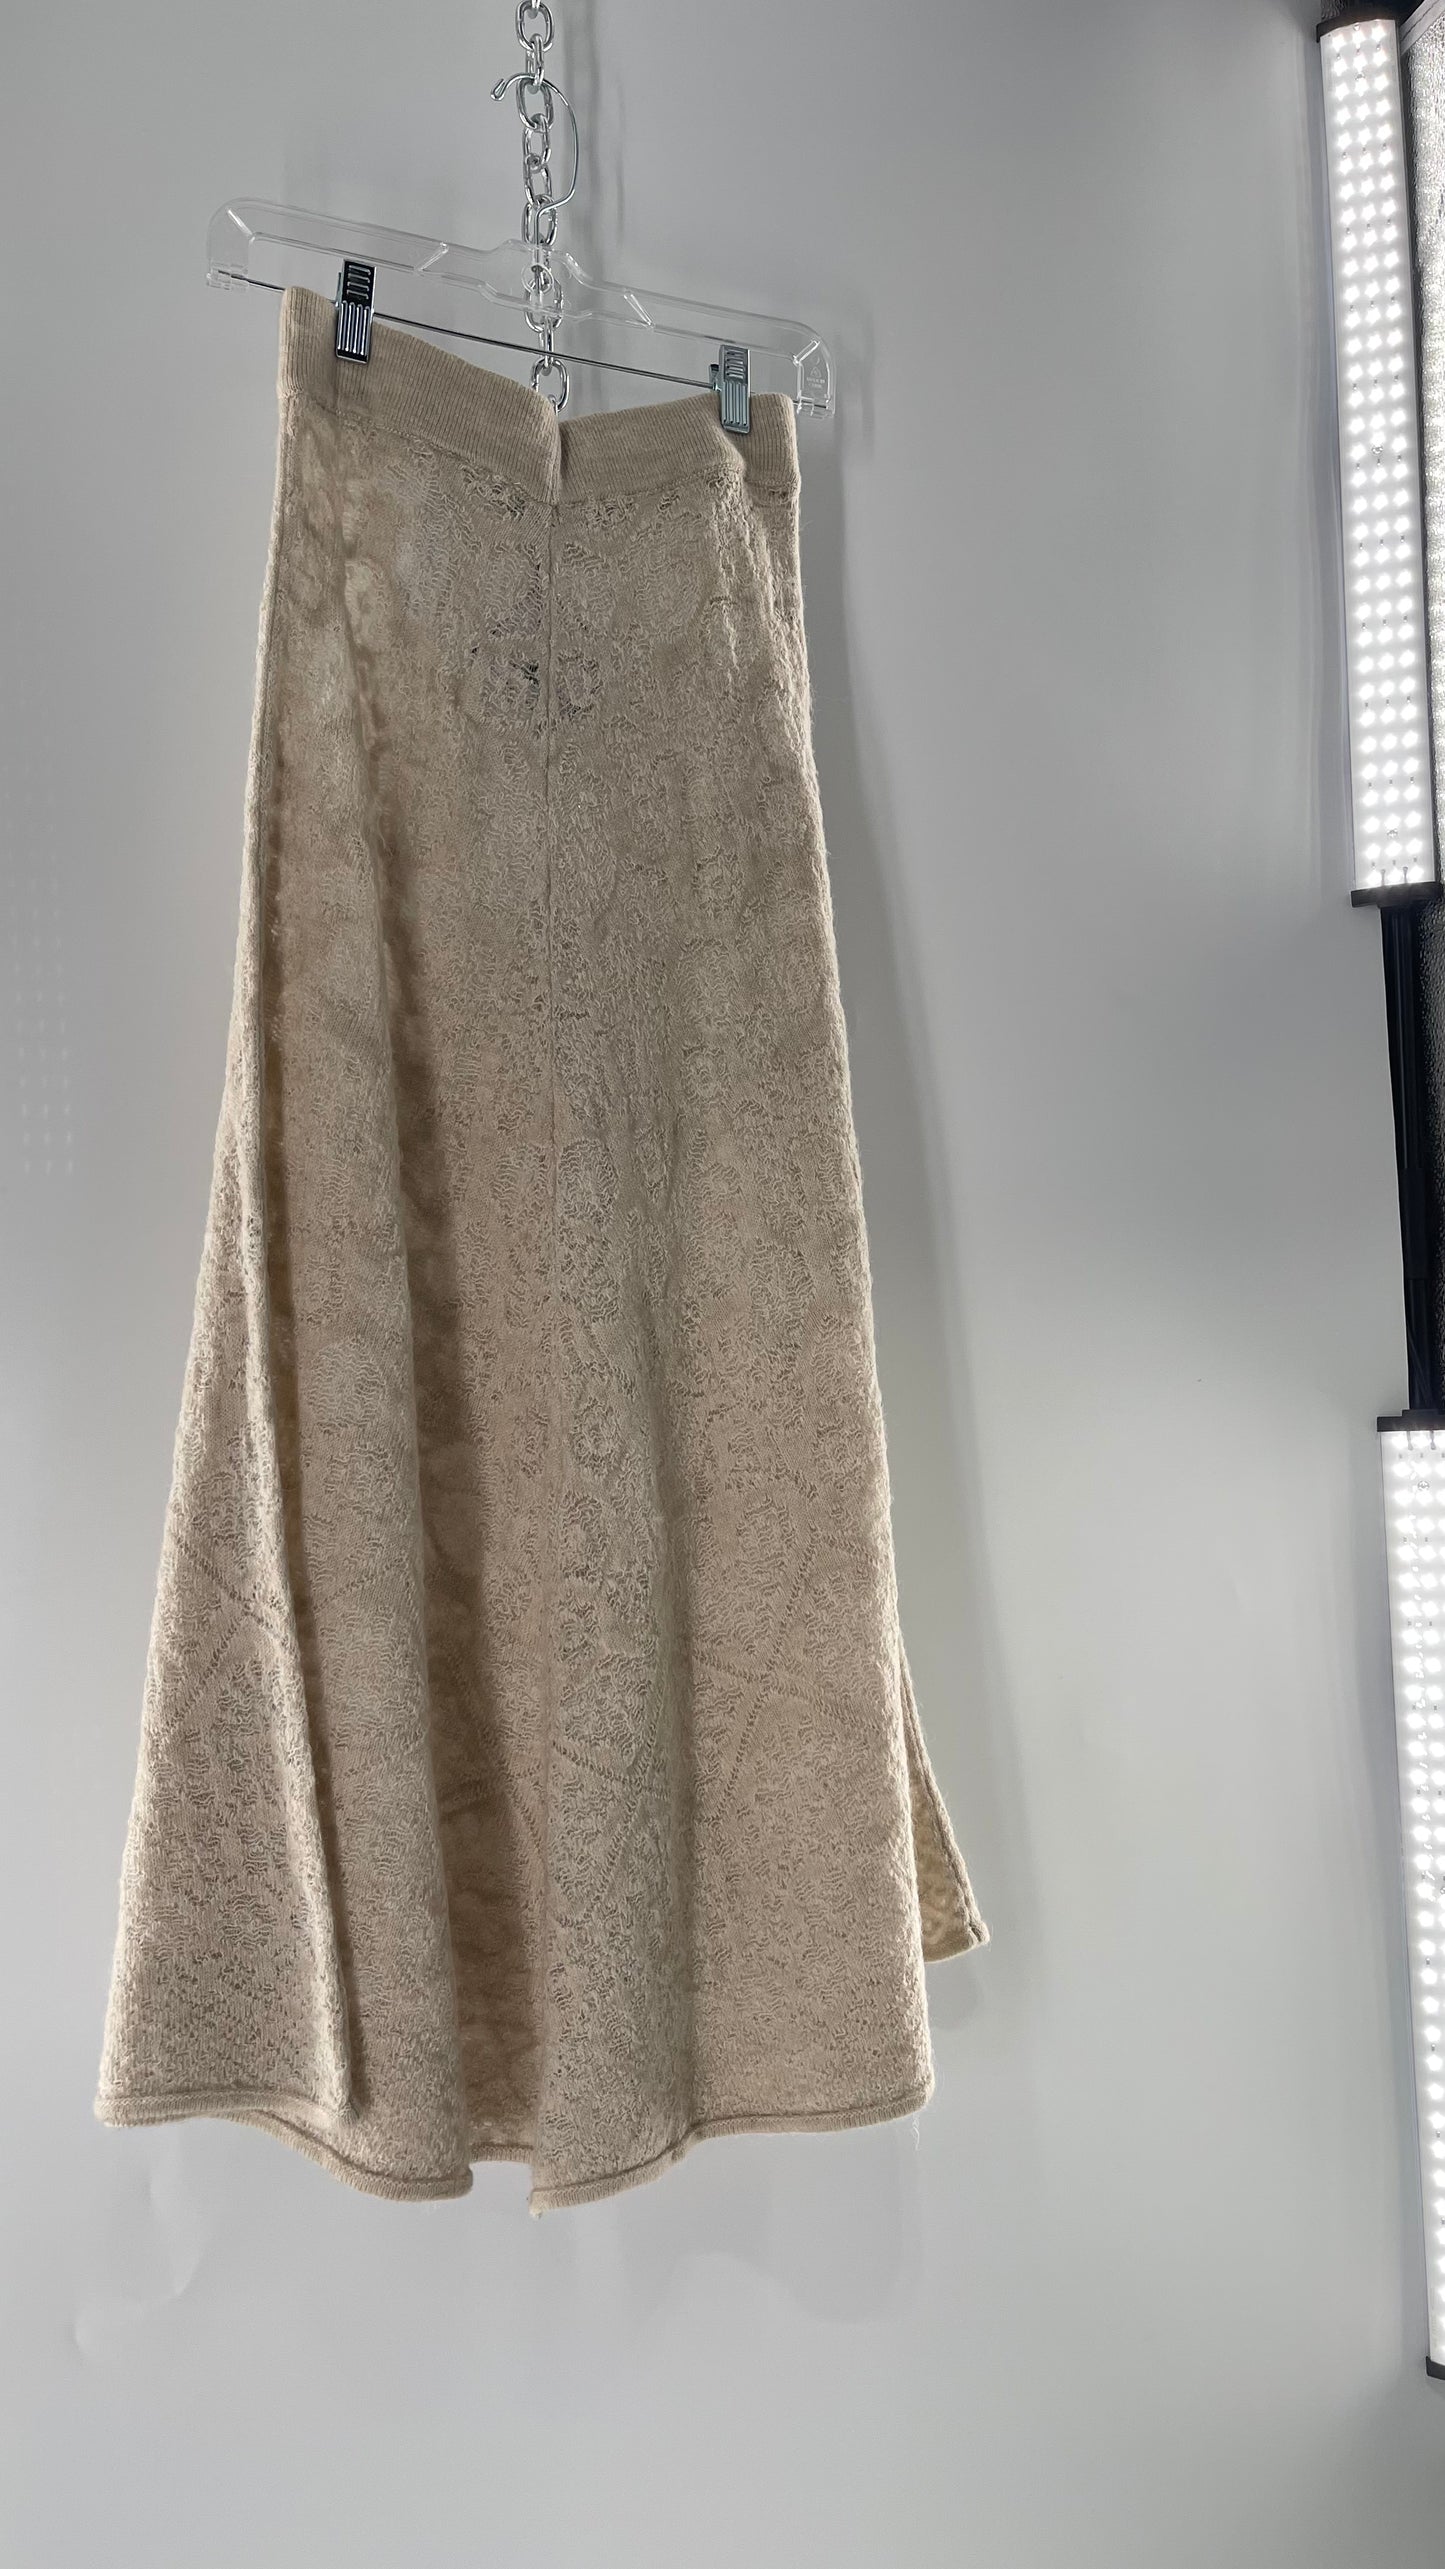 ZARA Open Knit Patterned Slightly Translucent Oatmeal Skirt (Small)